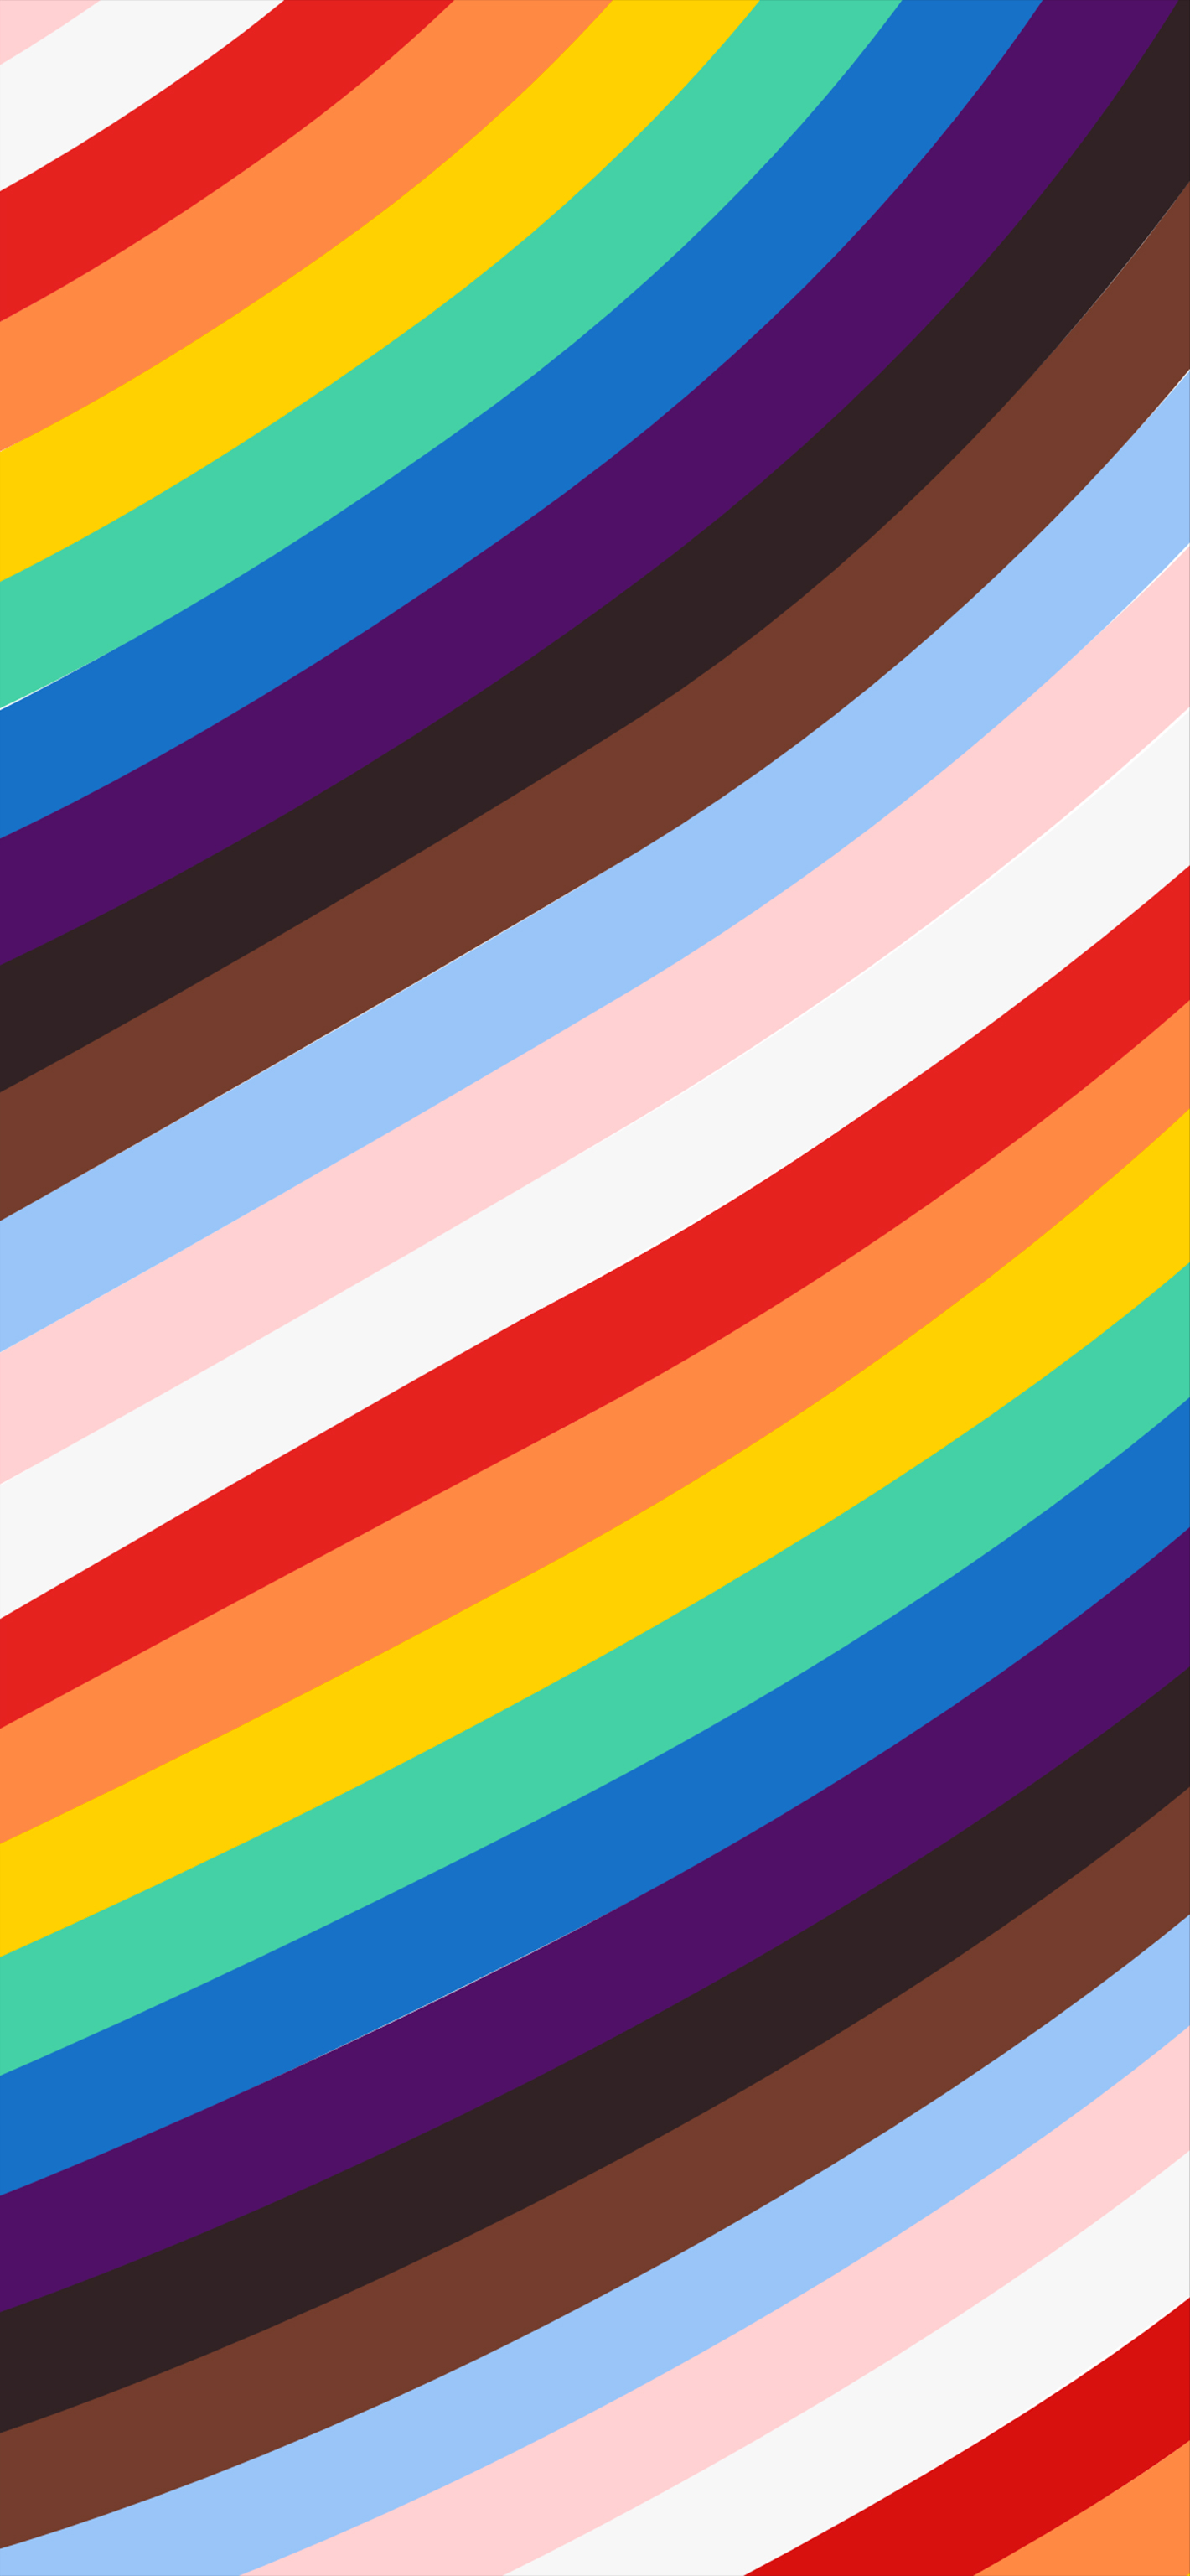 Pride Wallpapers 2020